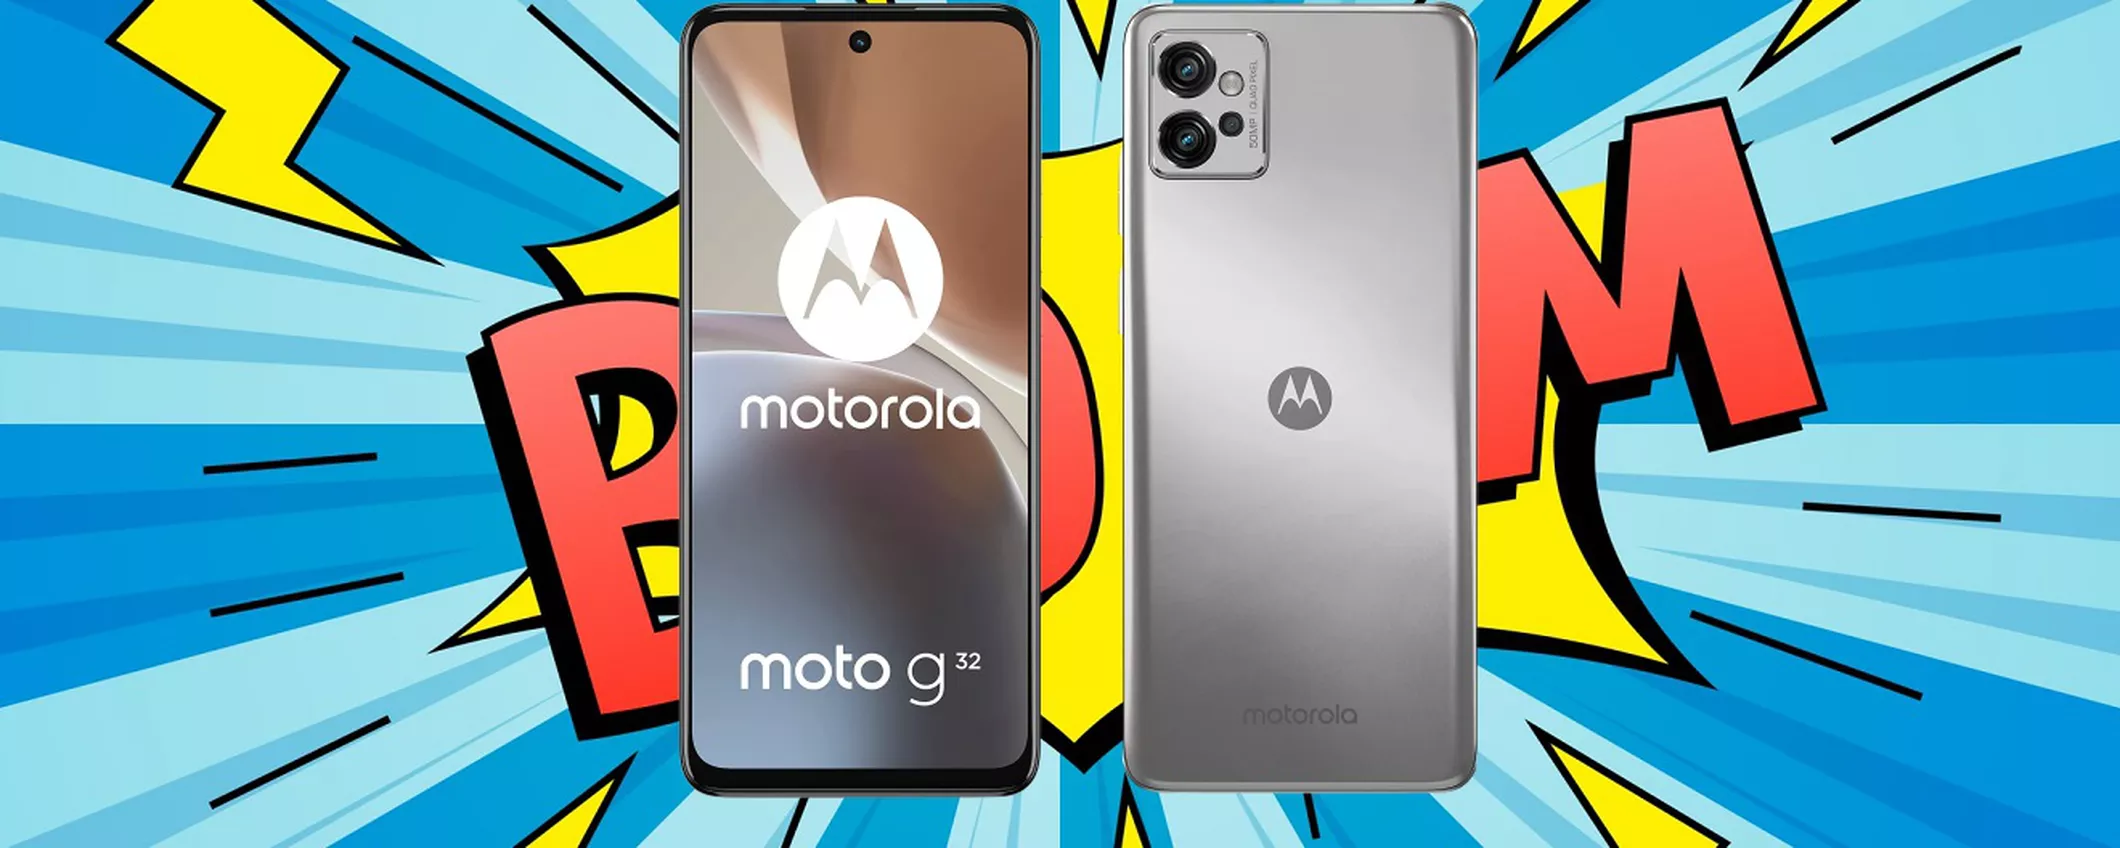 SCONTO BOMBA DEL 41% sul Motorola moto g32: offerta LIMITATISSIMA